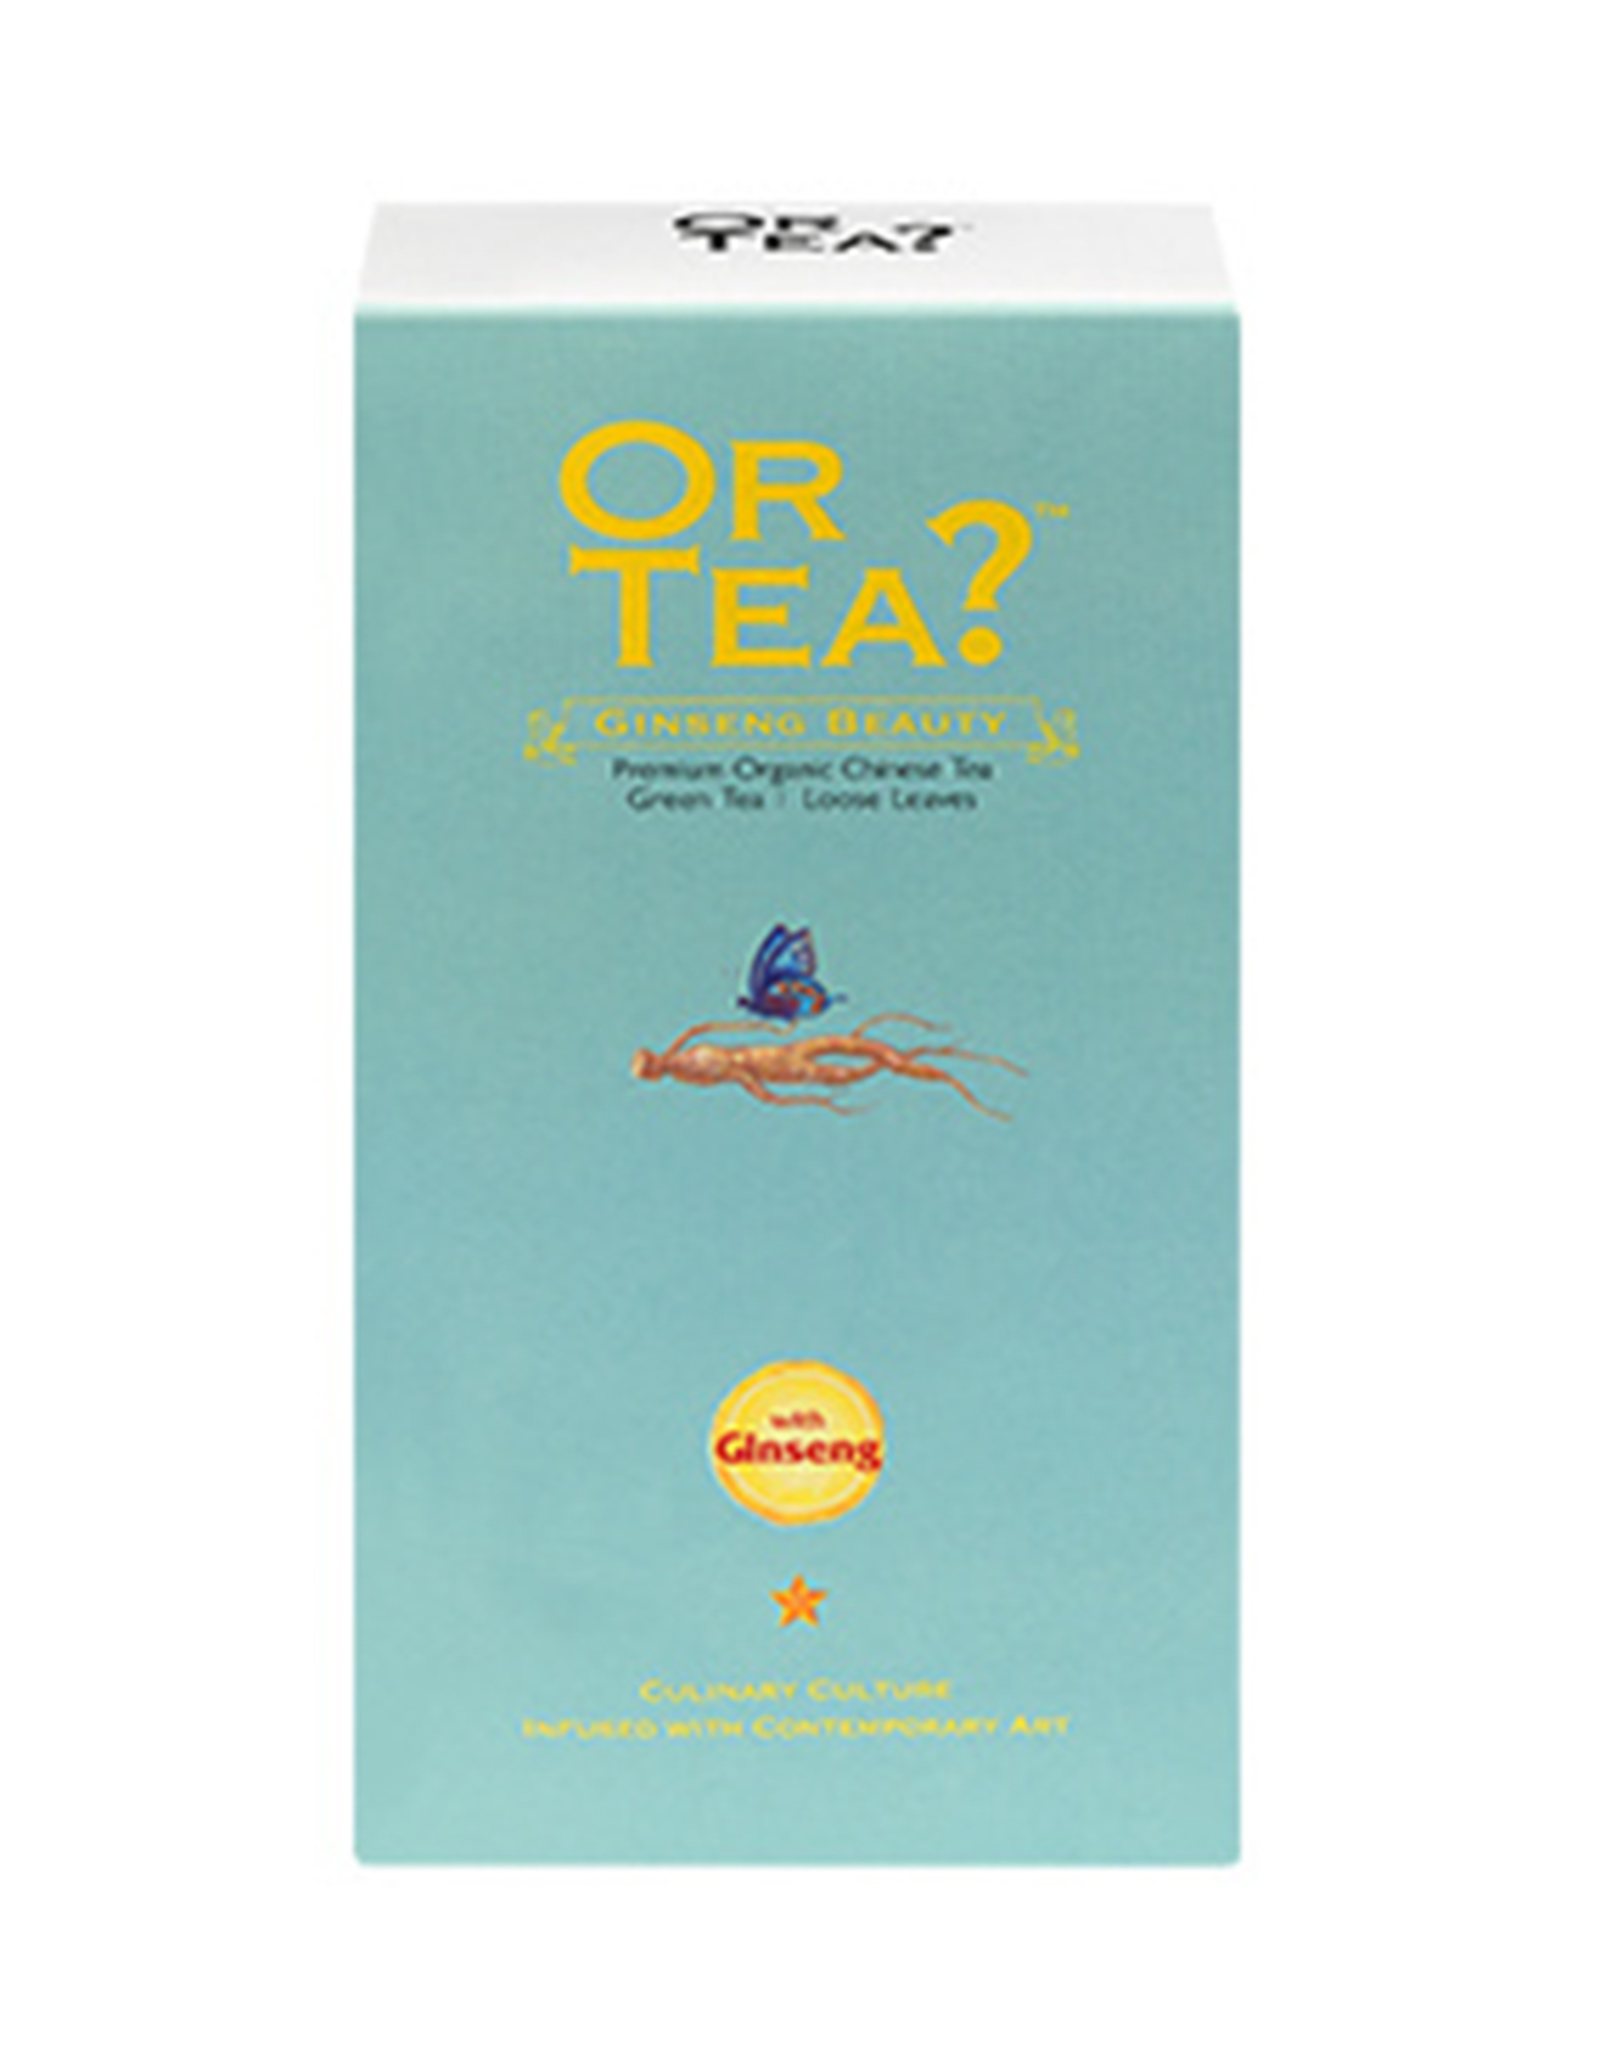 Or Tea? Ginseng Beauty BIO - Groene thee met zoethout en ginseng